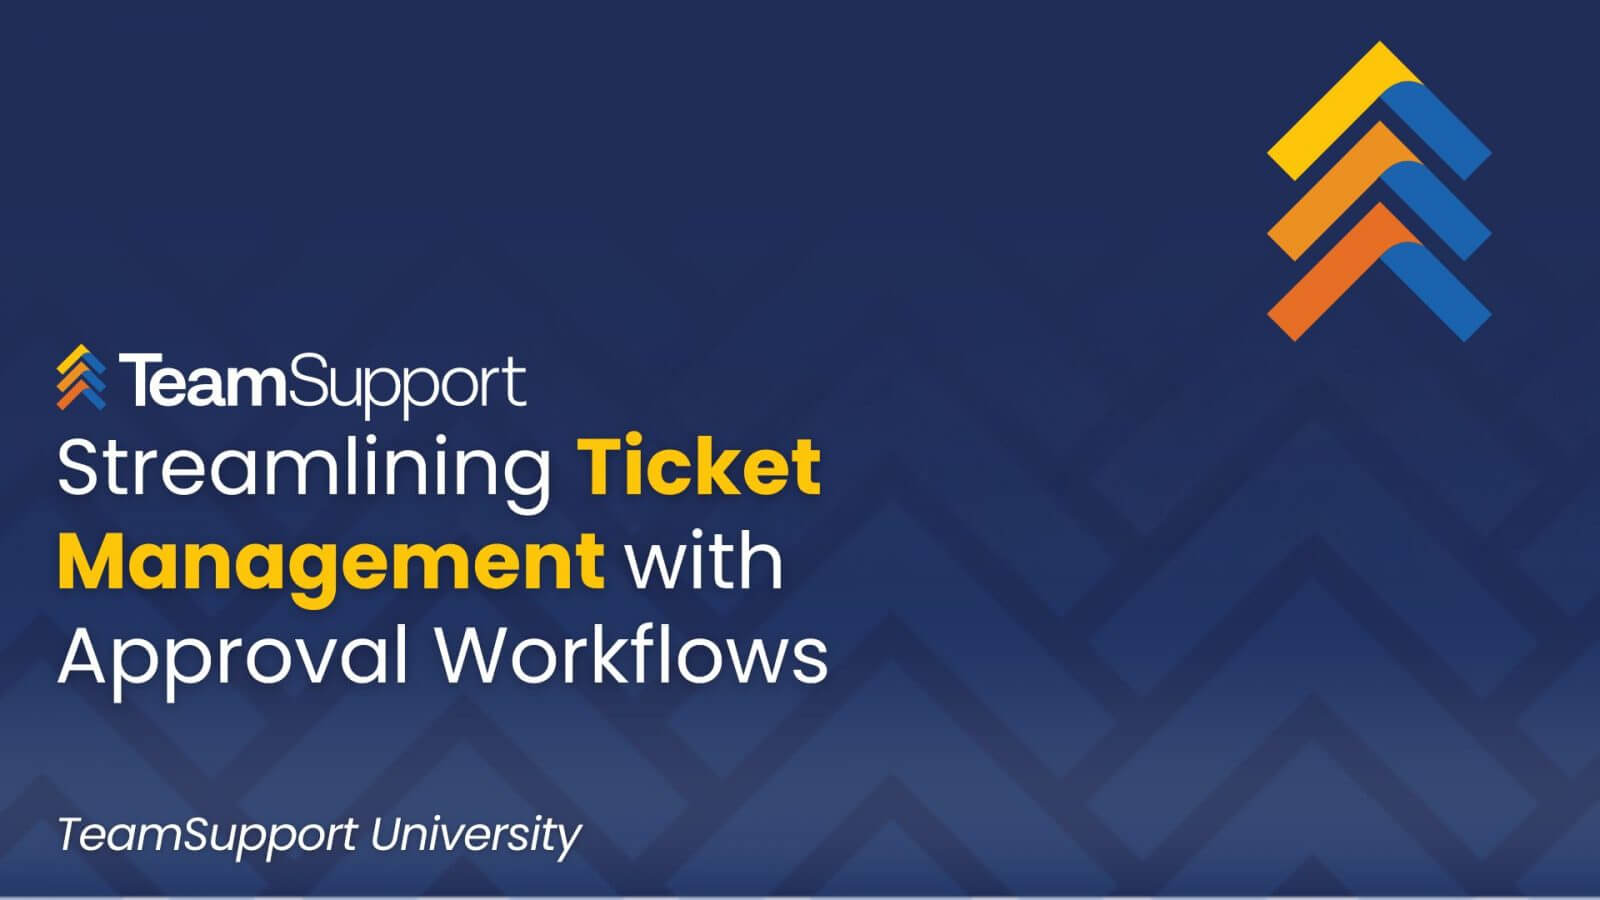 TeamSupport University: Streamline Ticket Management